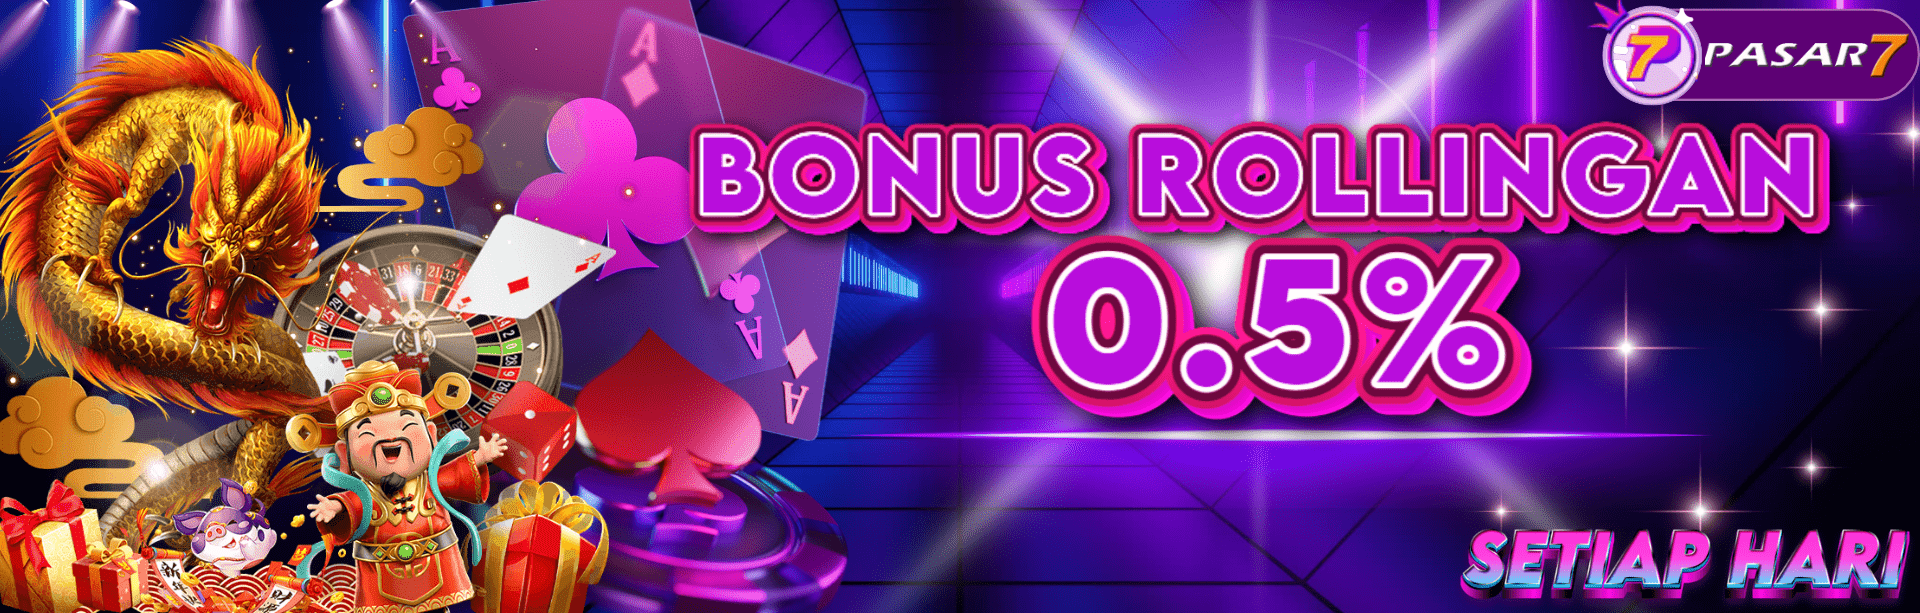 Bonus Rolingan Slot & Arcade Game 0.5%